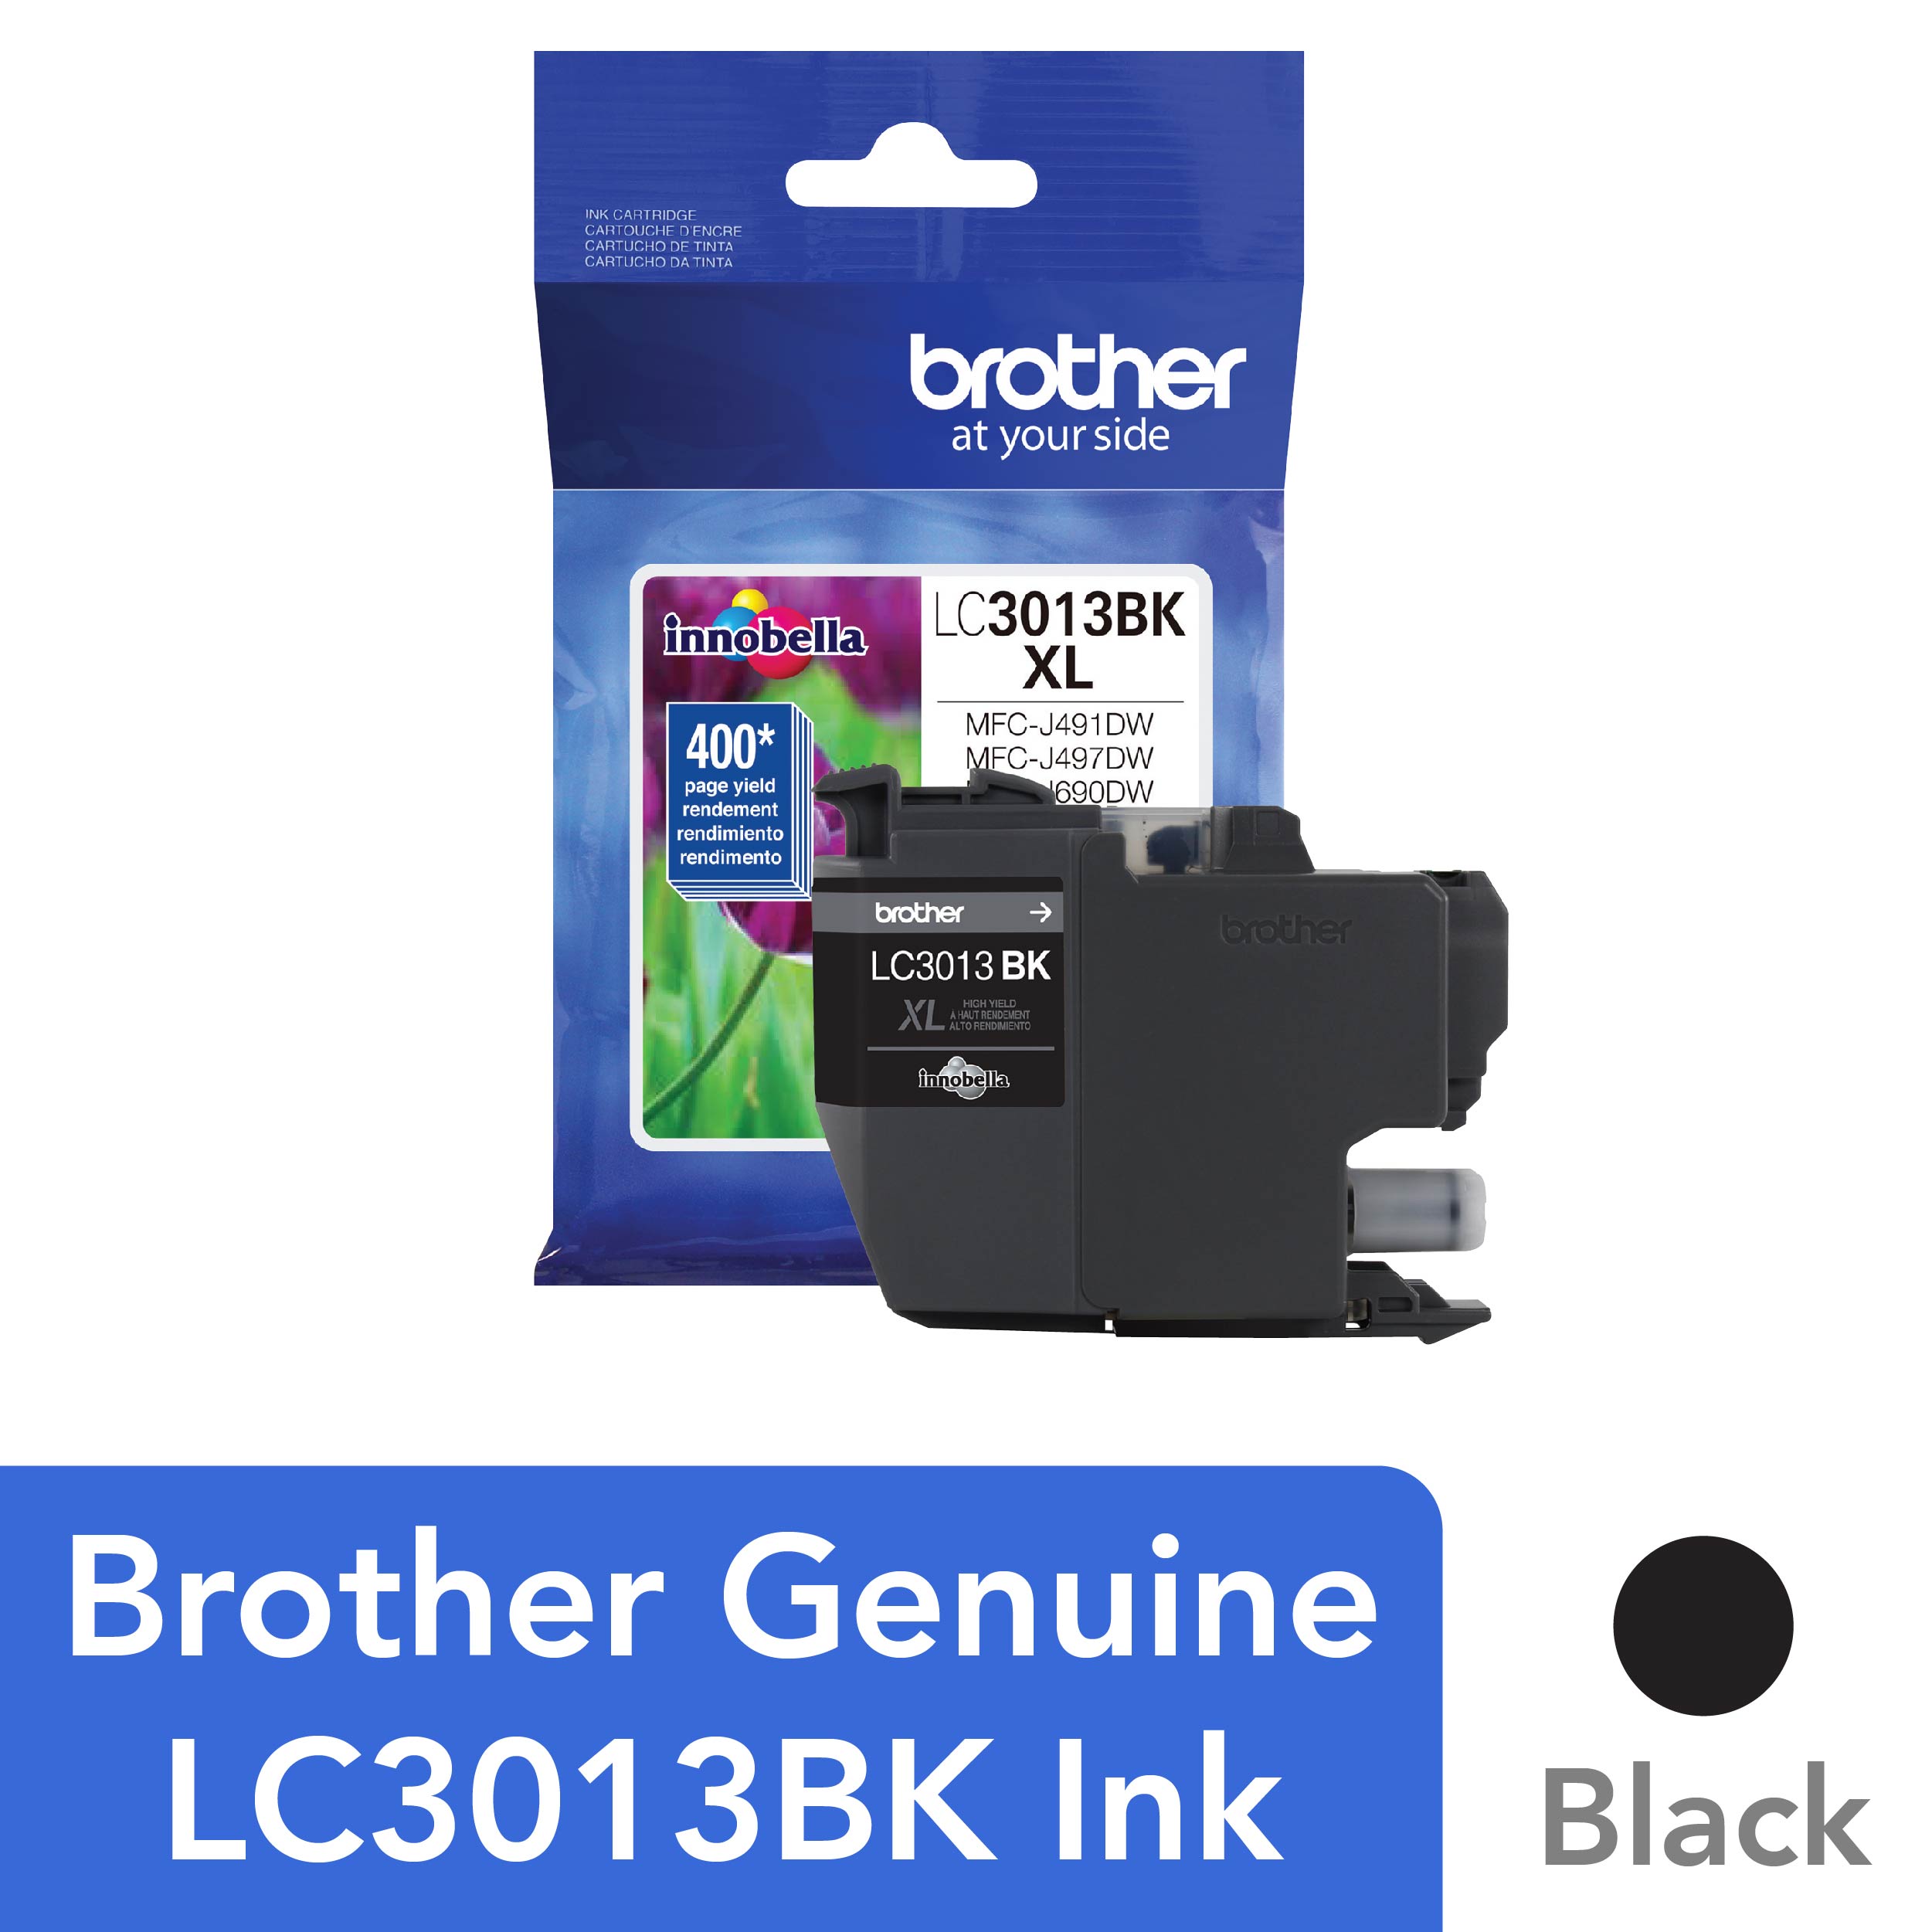 Brother Genuine LC3013BK High-yield Black Printer Ink Cartridge - image 1 of 6